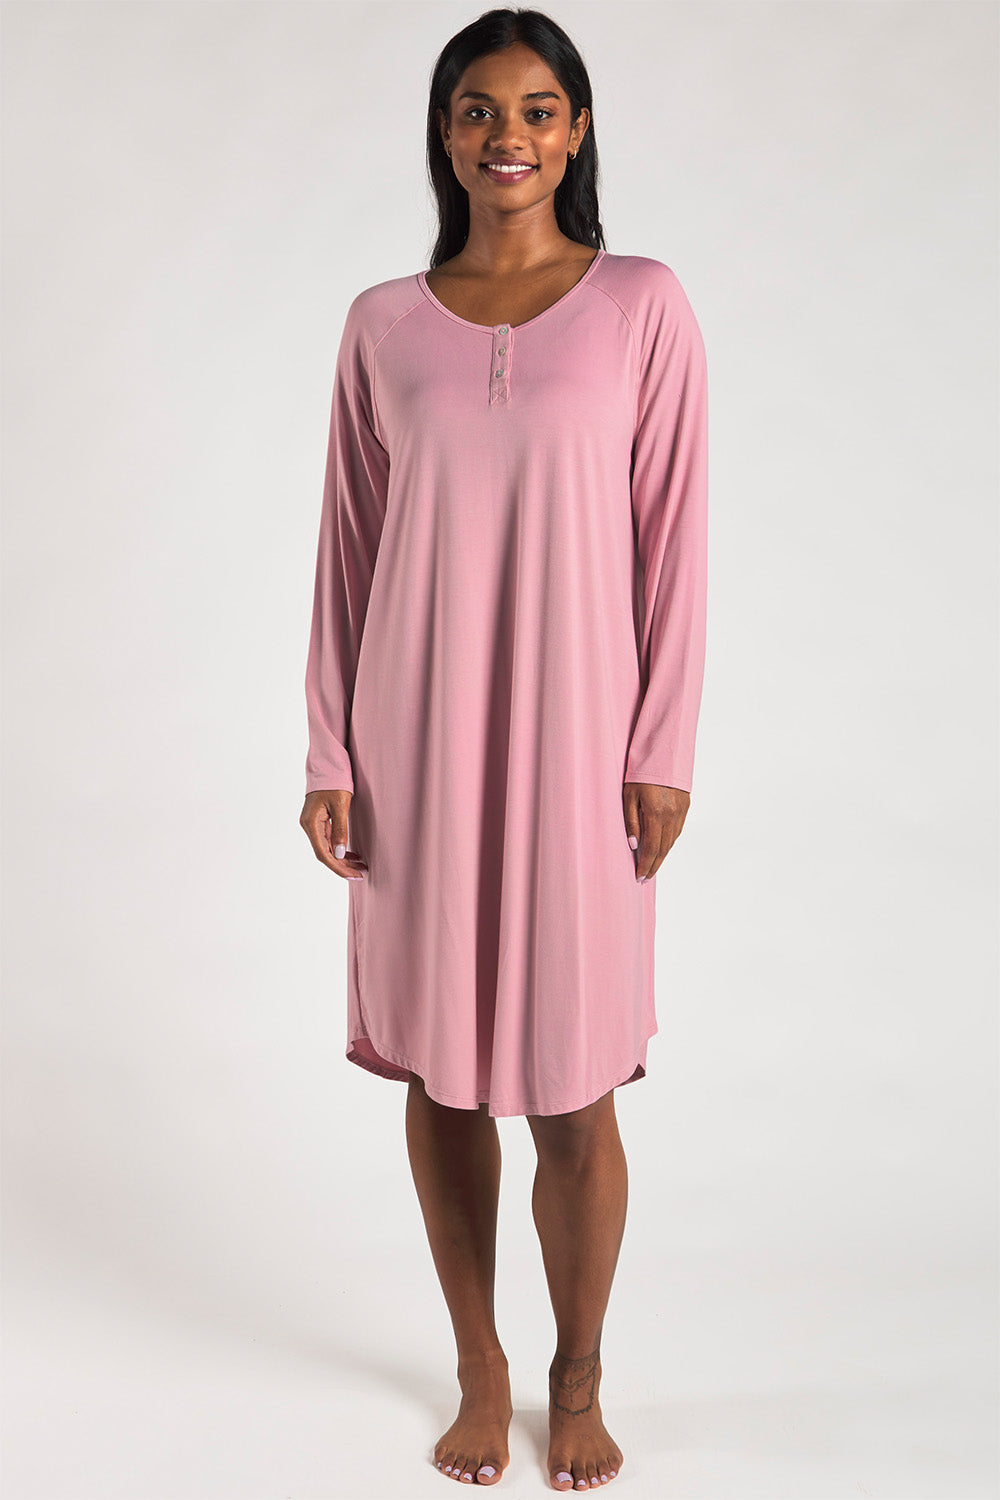 Women's Pink sustainable bamboo sleep dress from Terrera.